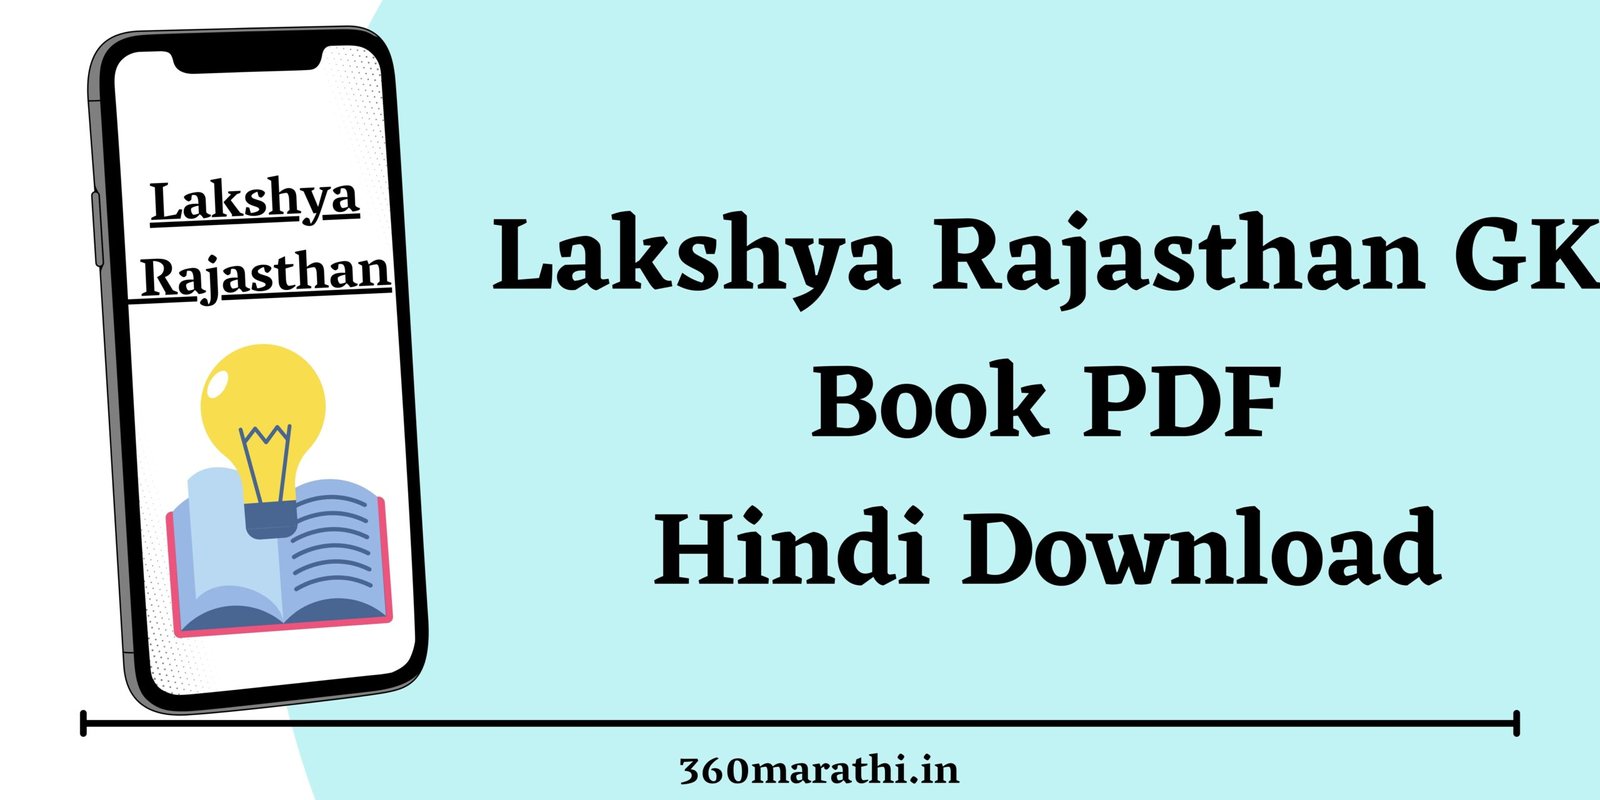 Lakshya Rajasthan GK Book PDF in Hindi Download